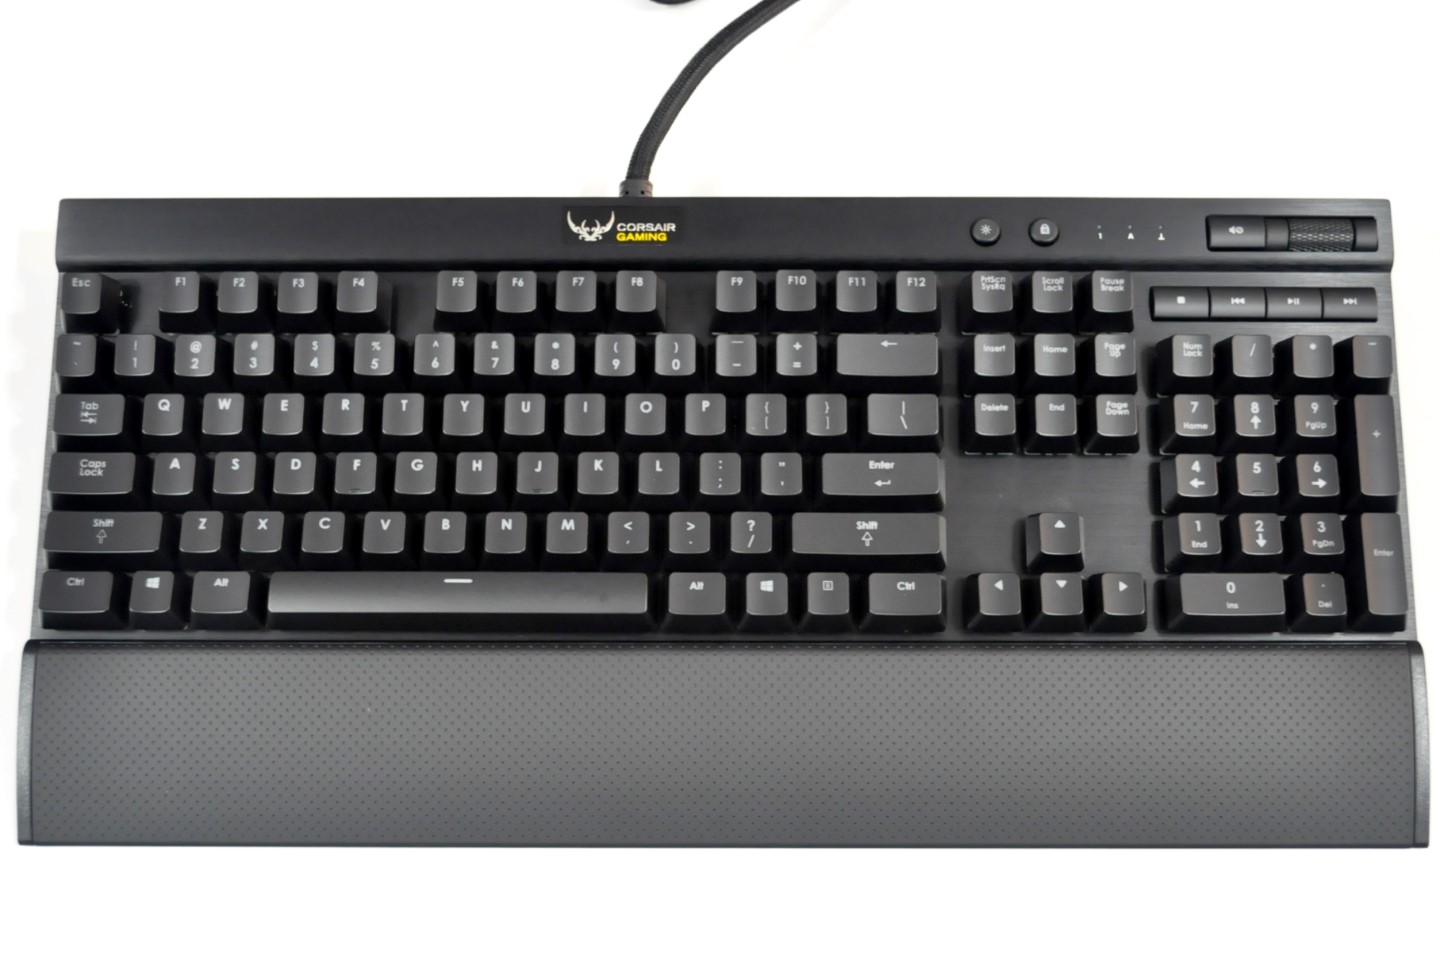 The Corsair Gaming RGB Mechanical - Corsair Gaming K70 RGB Mechanical Keyboard Review